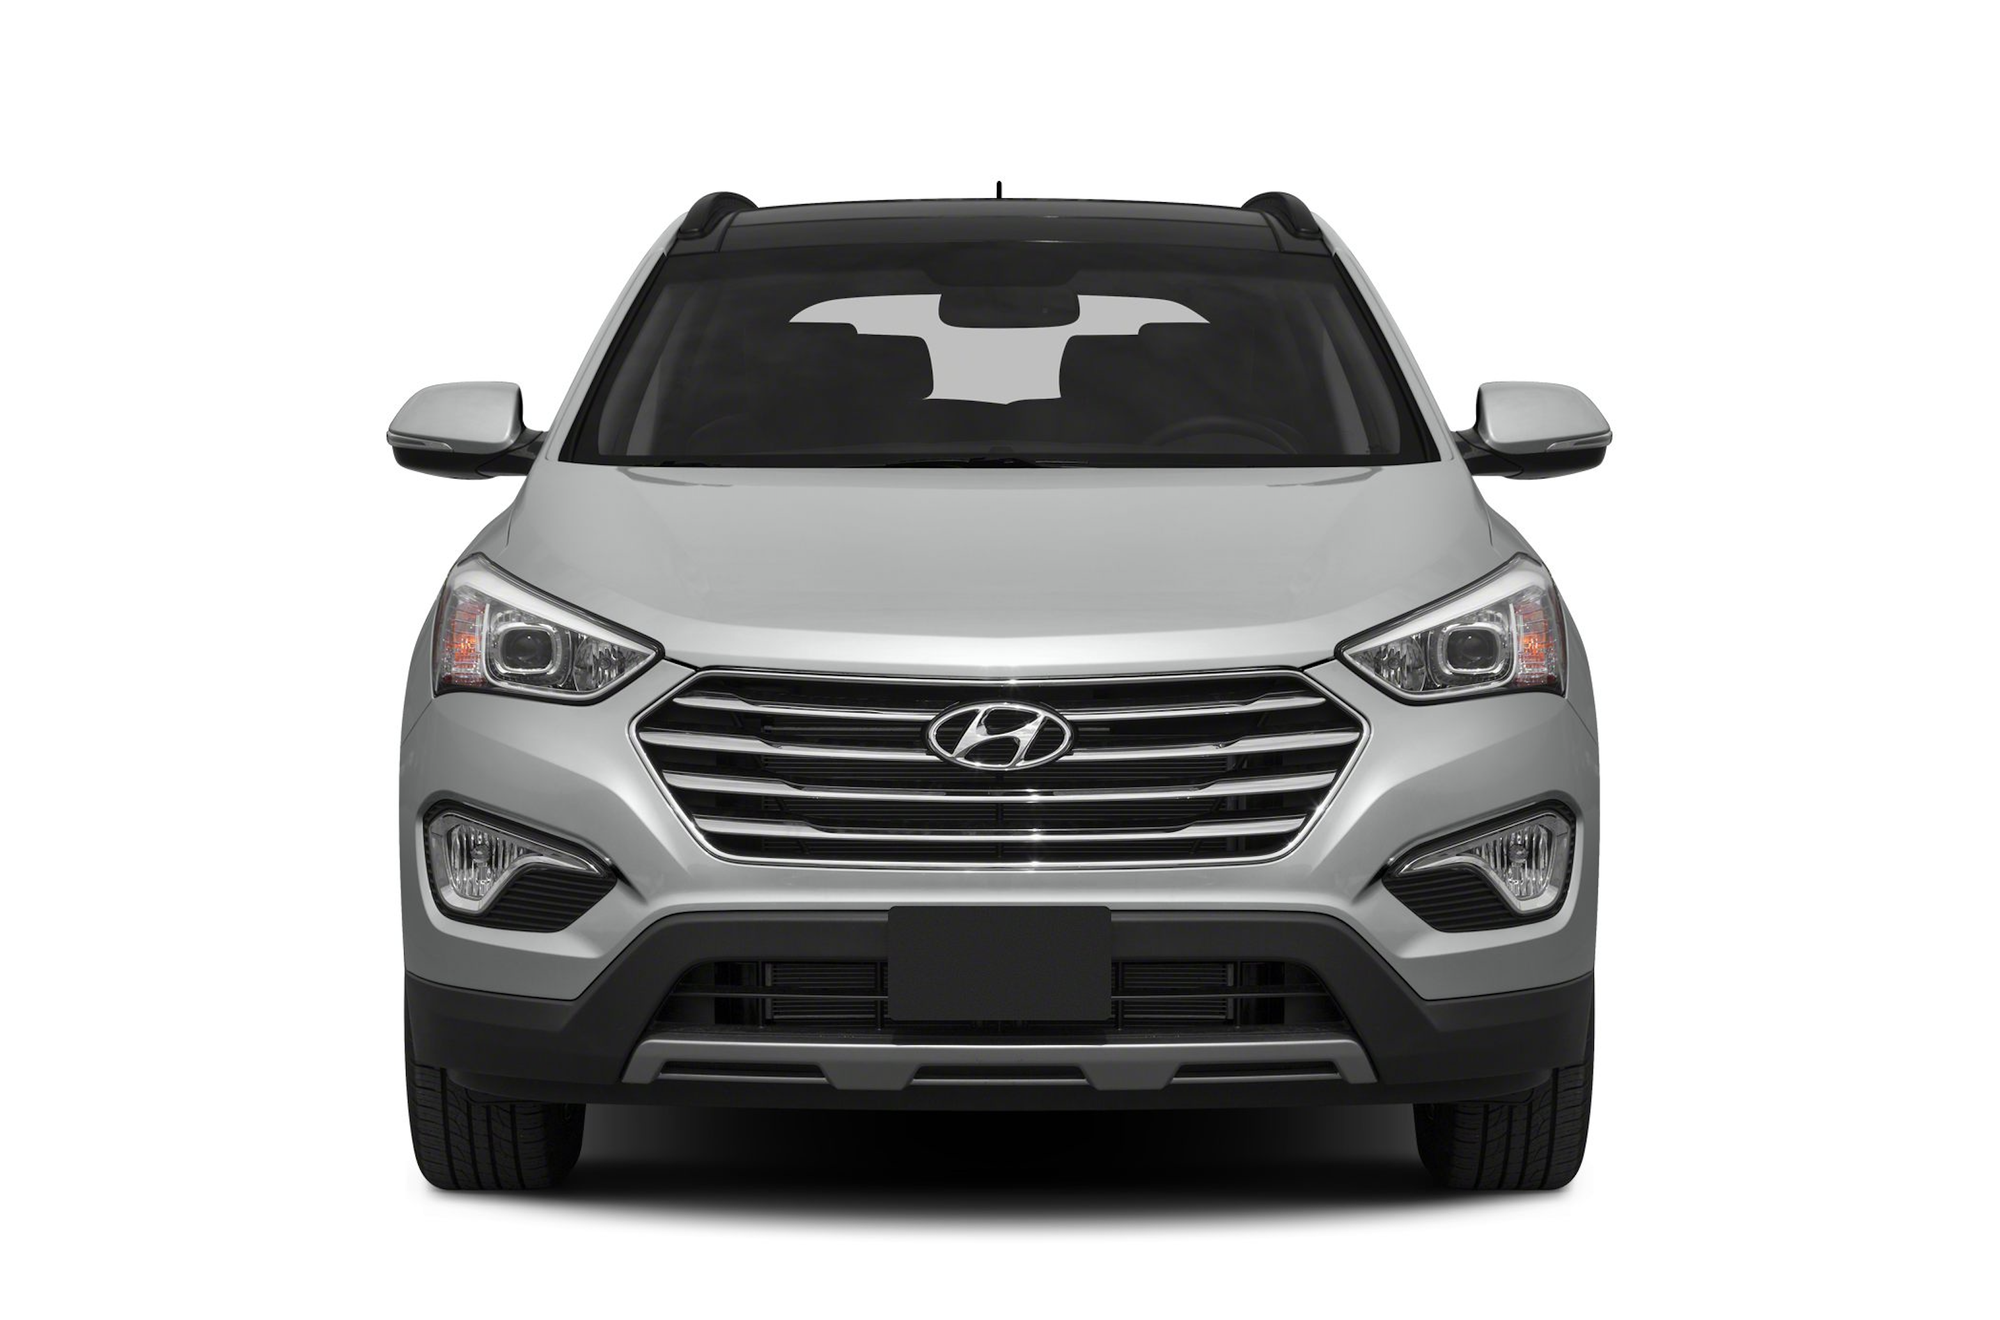 Test Drive 2014 Hyundai Santa Fe Limited  The Daily Drive  Consumer  Guide The Daily Drive  Consumer Guide